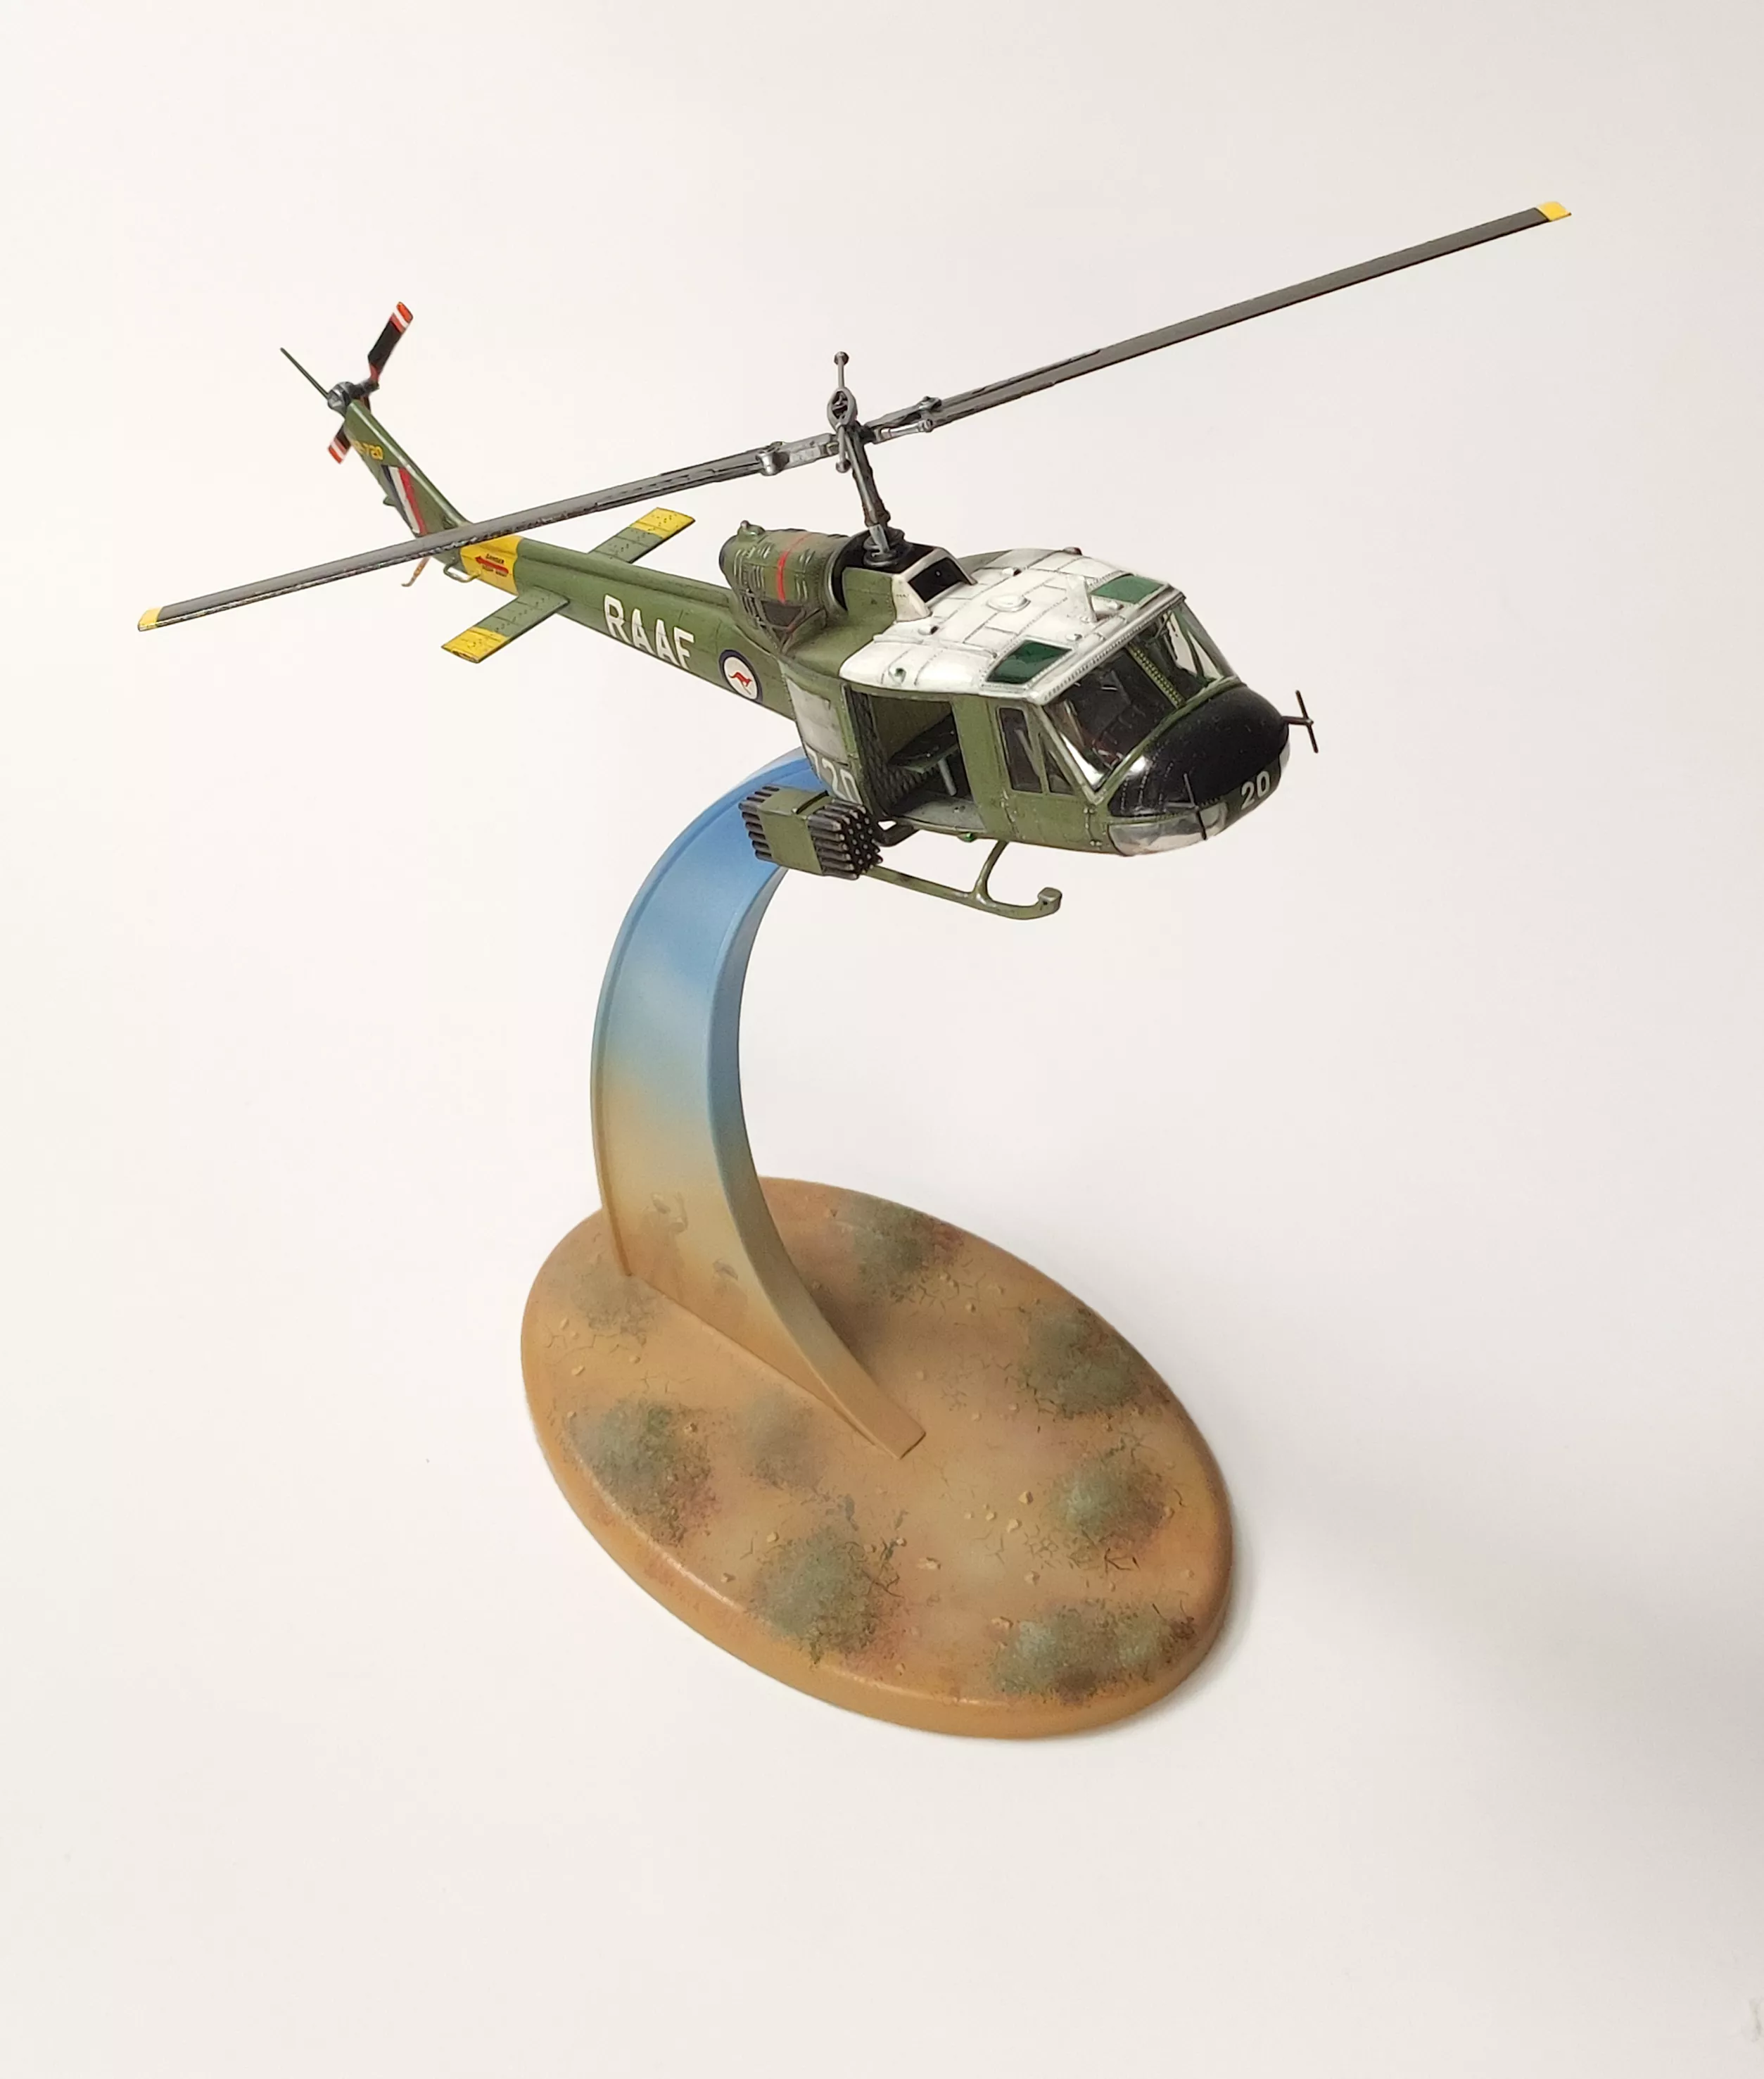 Вертолет UH-1B Huey